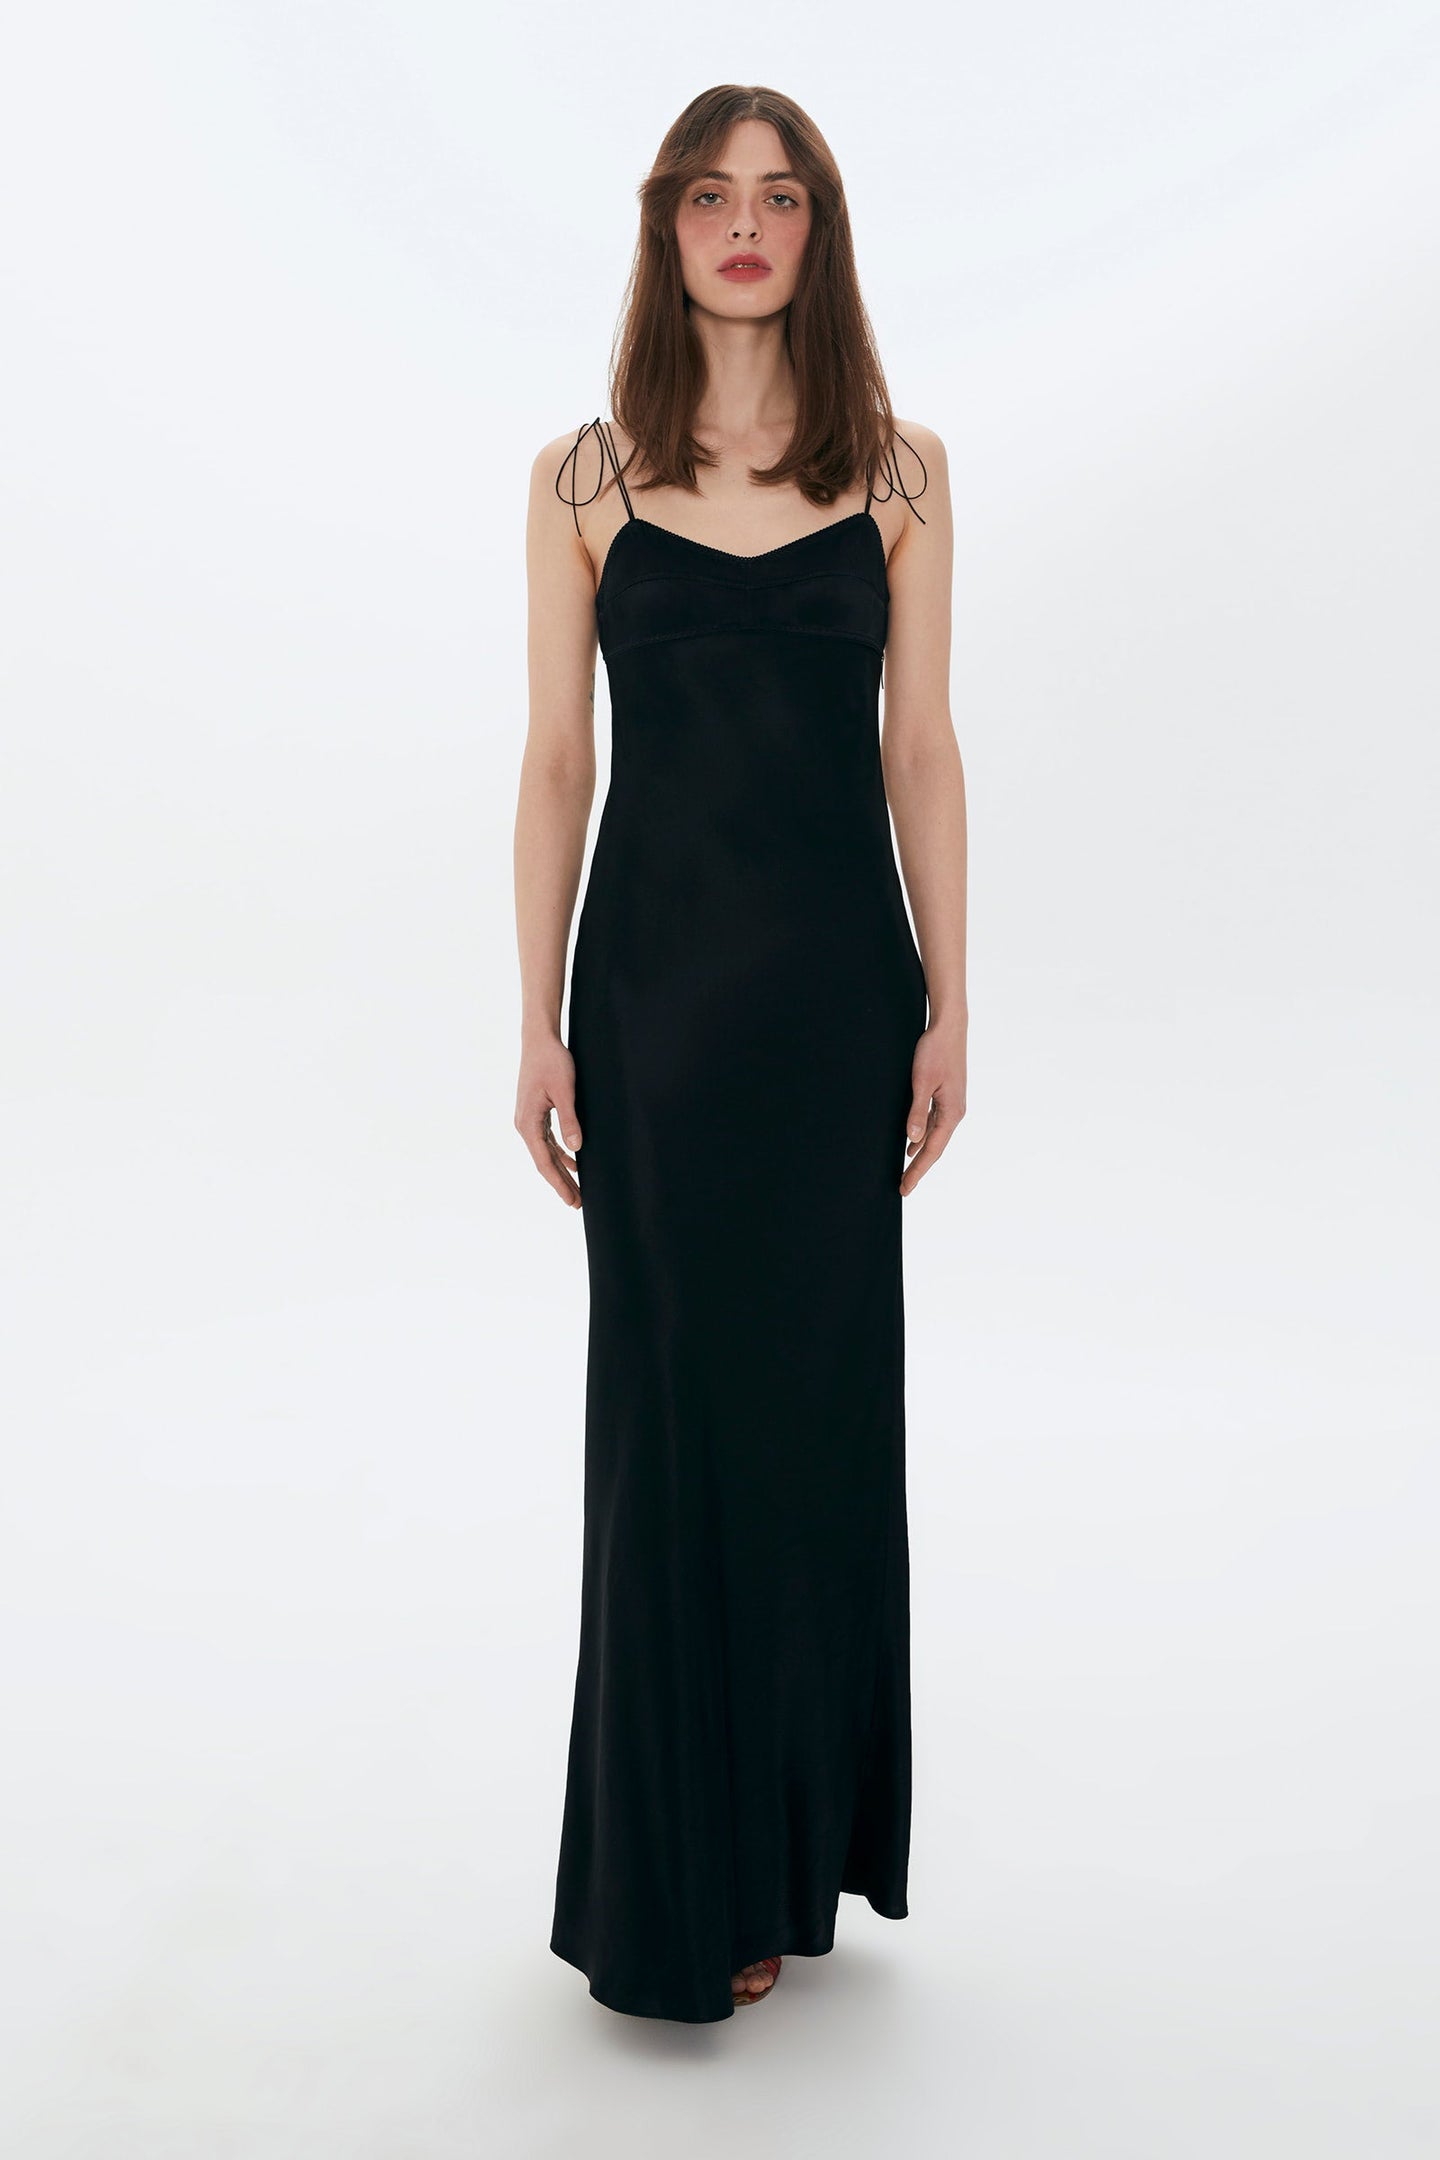 Model in black Paris dress